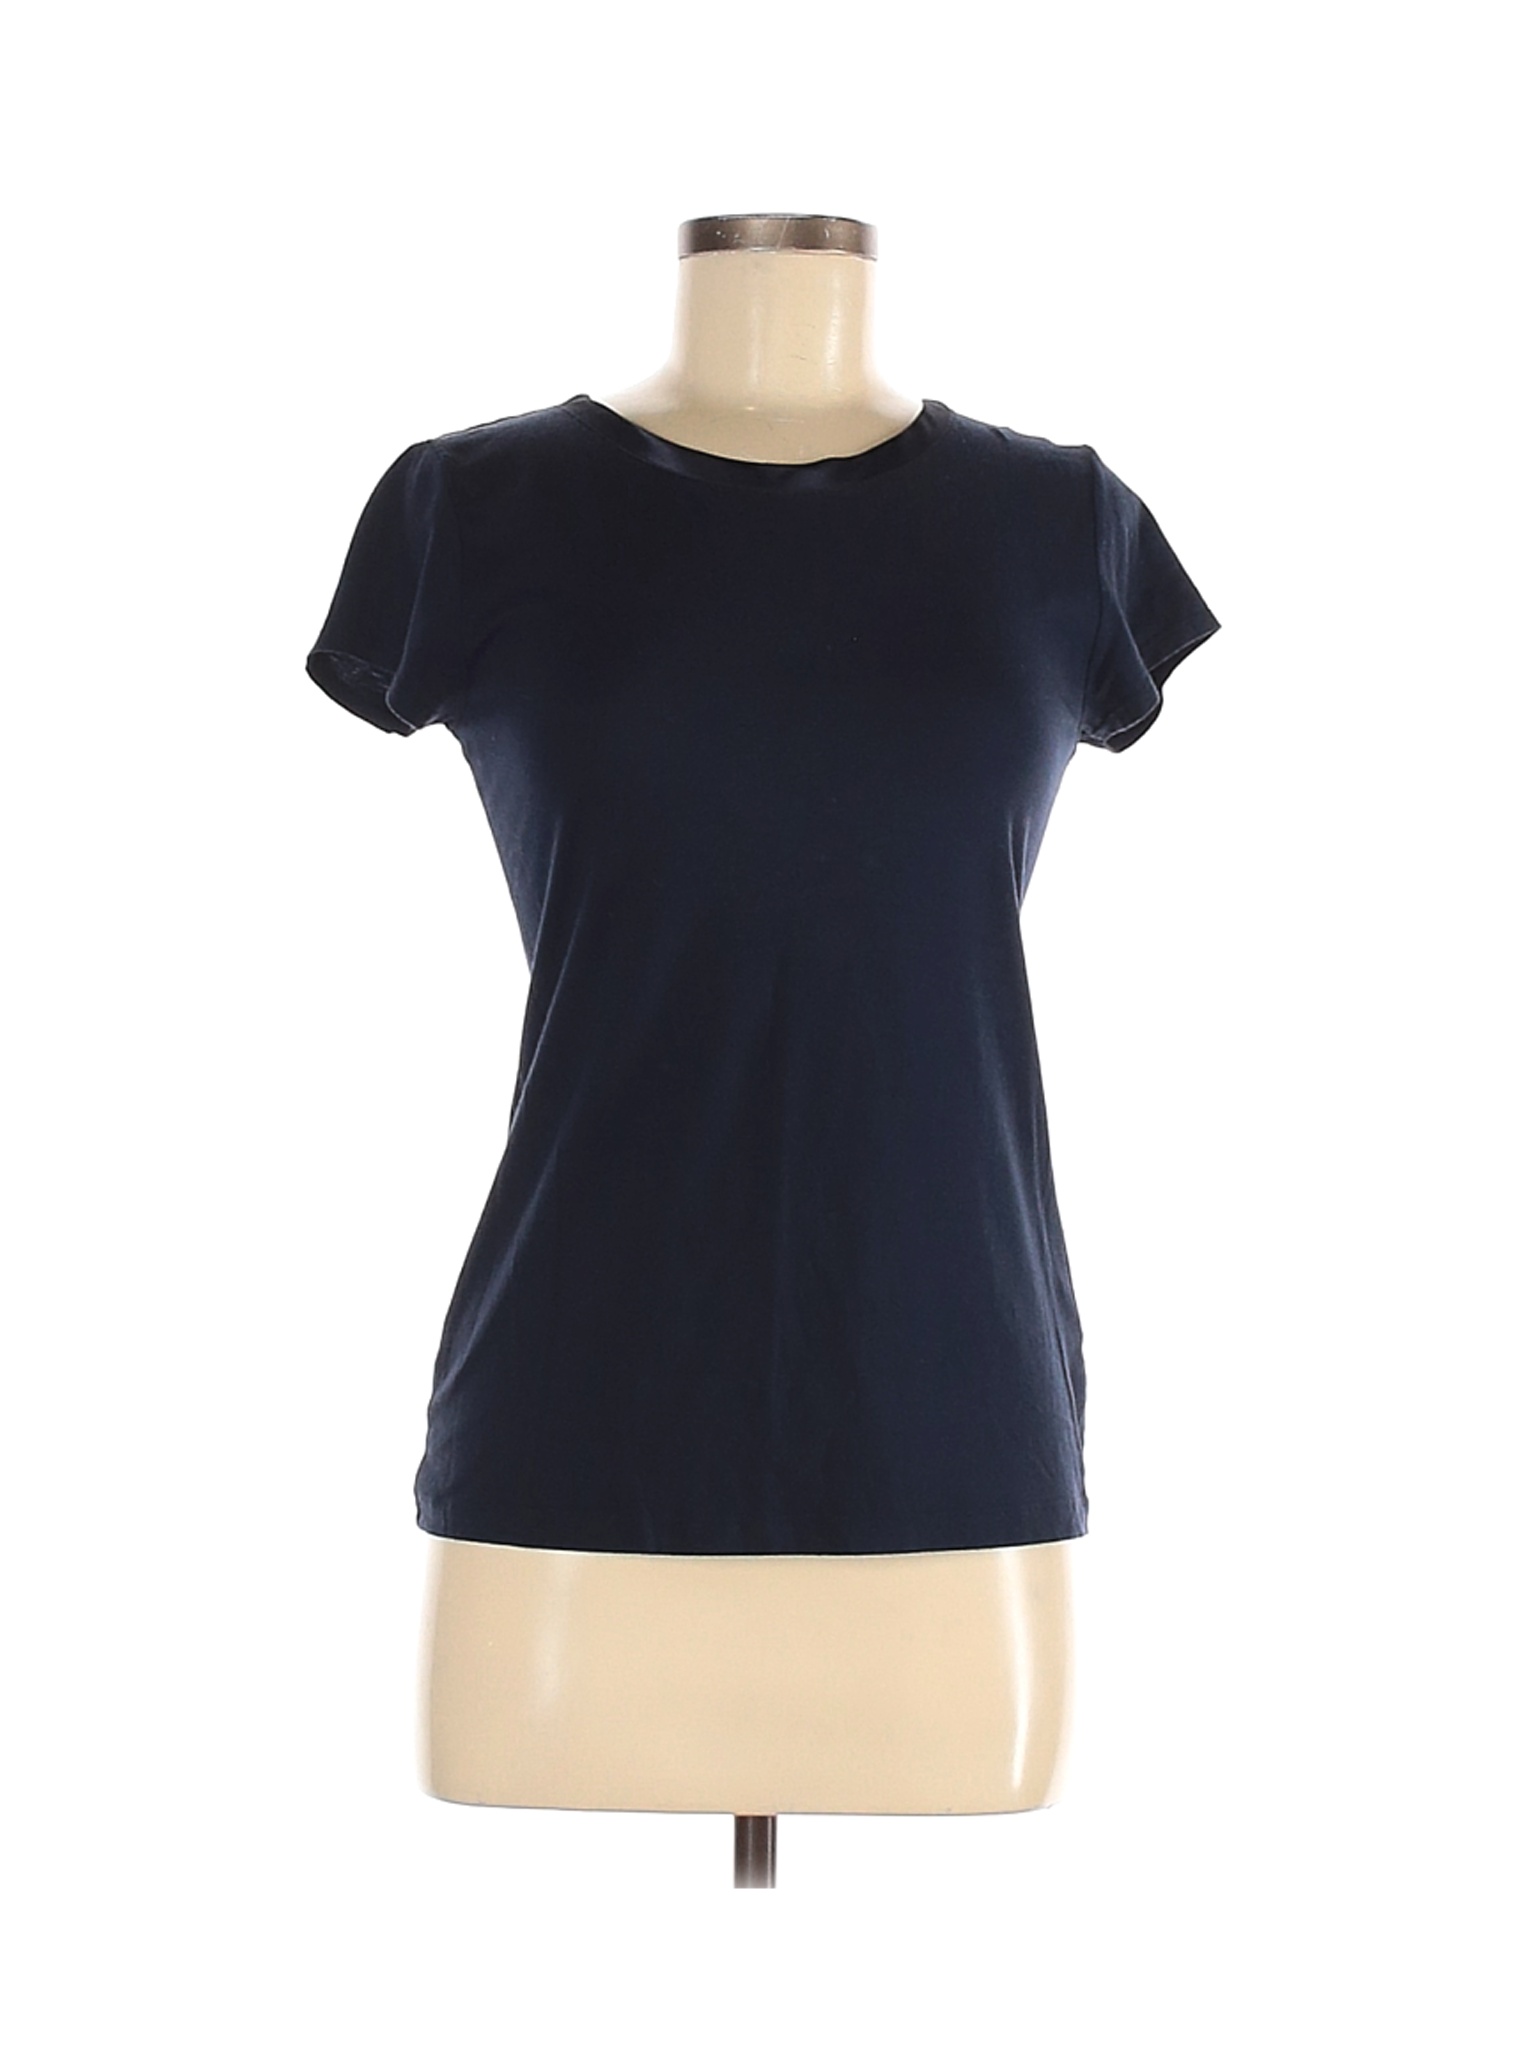 Banana Republic Women Black Short Sleeve T-Shirt S | eBay